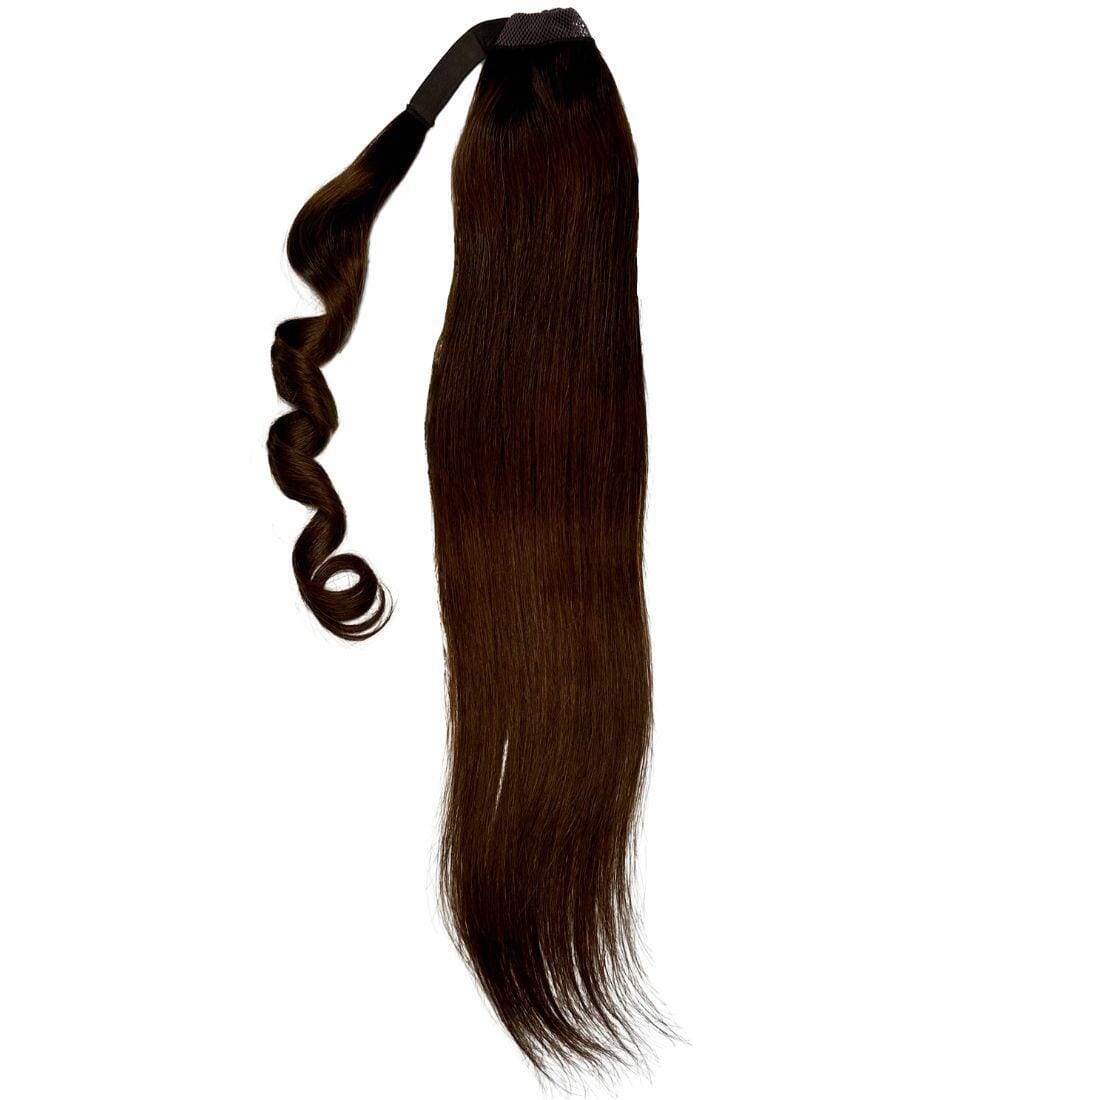 Dark Brown Ponytail HBL Hair Extensions 